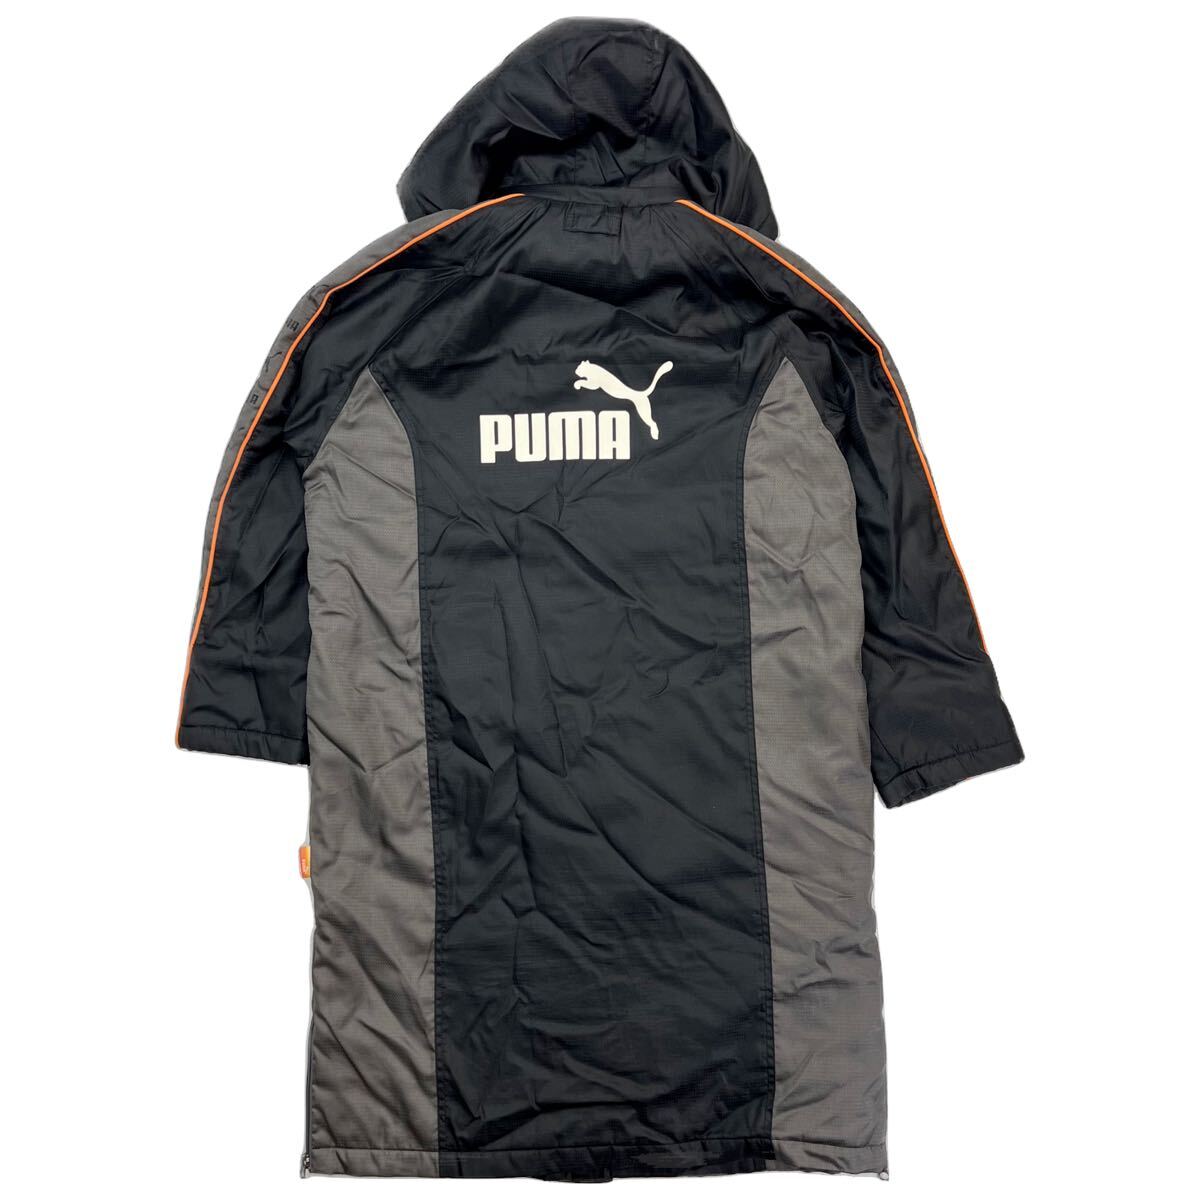 PUMA * Kids 160 bench coat middle fleece black gray orange autumn winter field soccer sport training popular Puma #E288